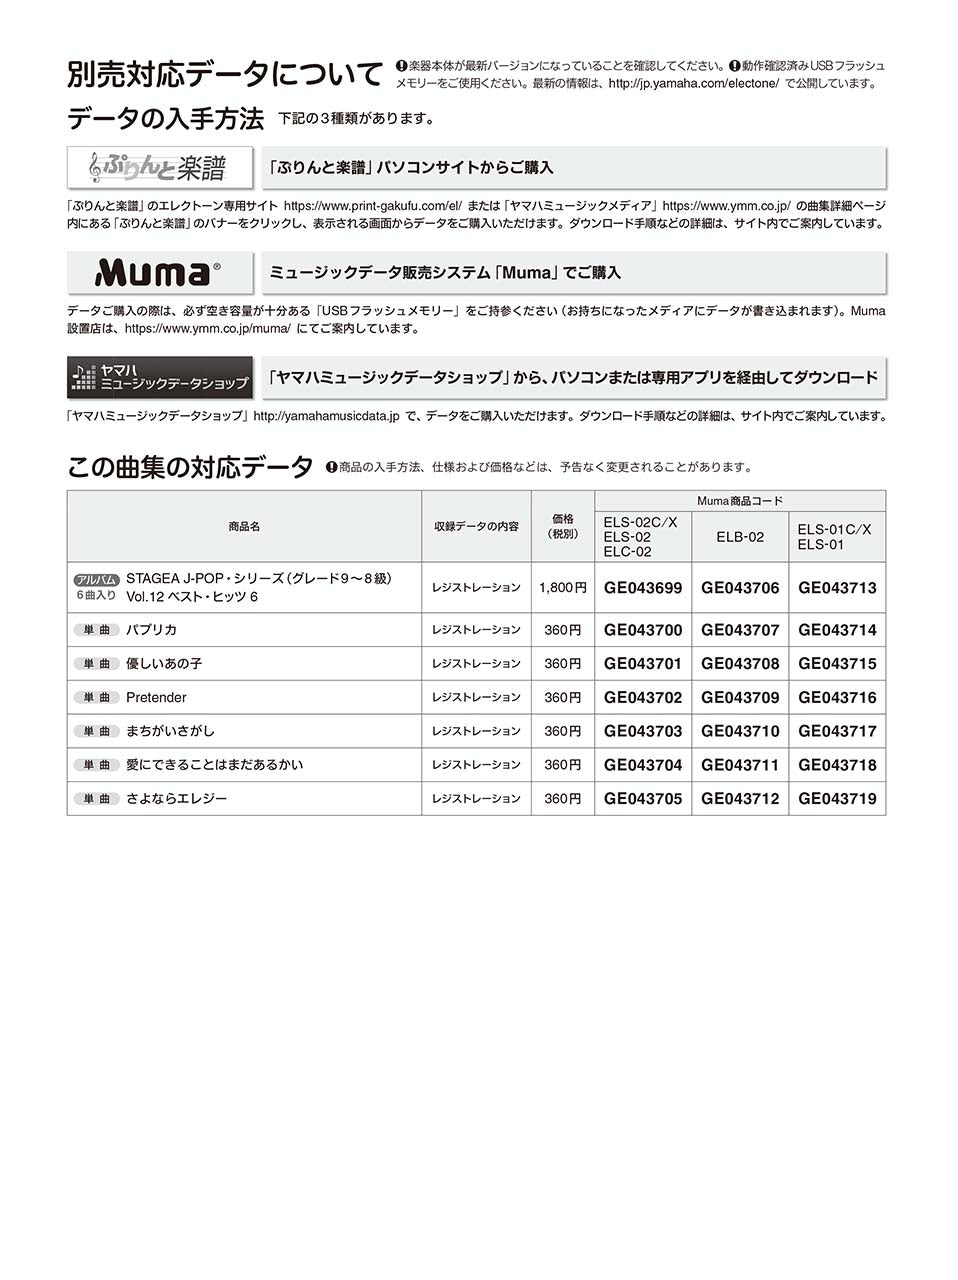 STAGEA J-POP 9～8級 Vol.12 ベスト・ヒッツ6_1